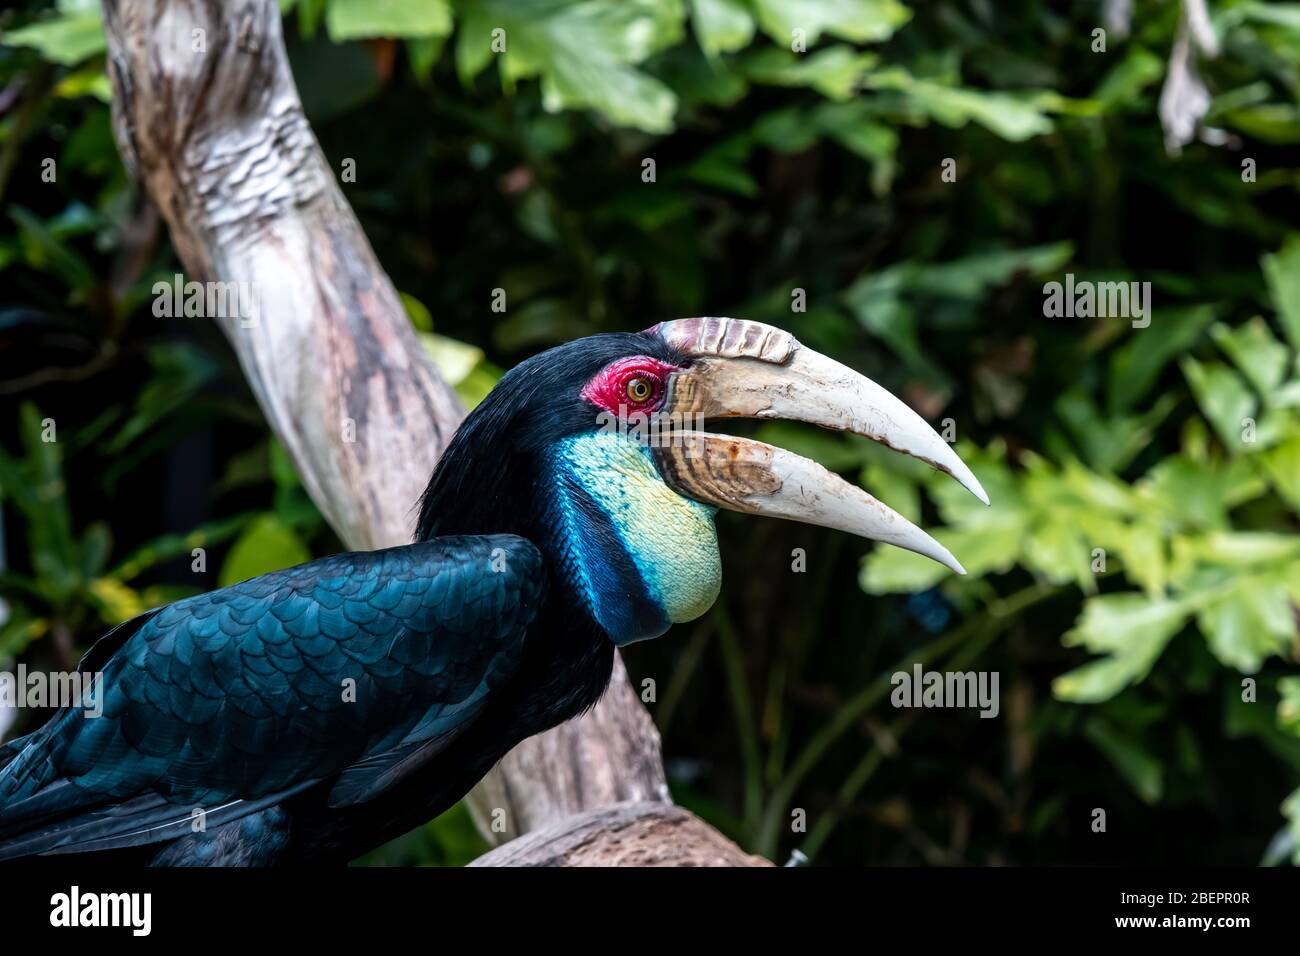 Great hornbill bird on branch, tropical Indian great hornbill bird on branch Stock Photo